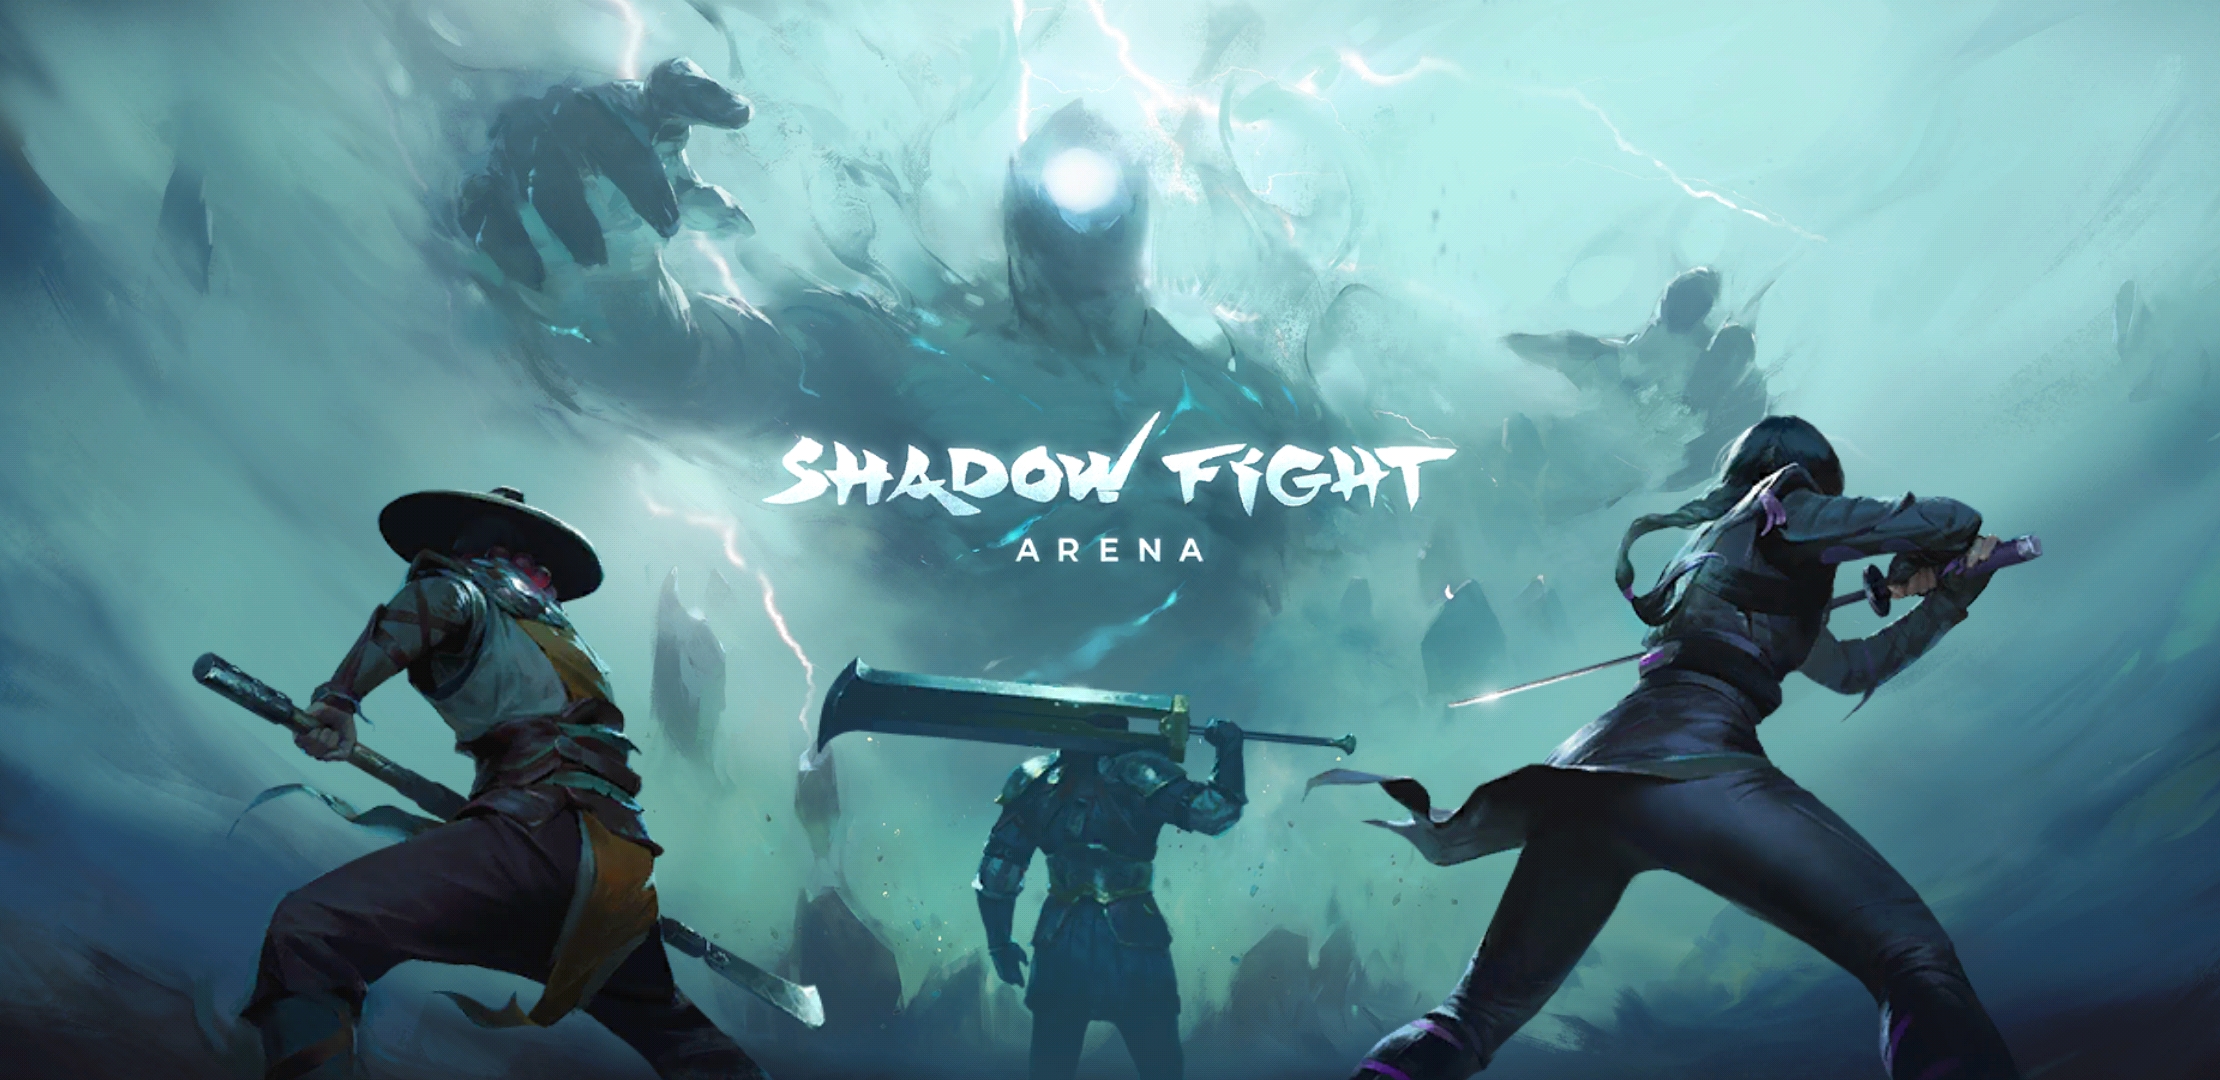 Shadow fight arena дата выхода в steam фото 8